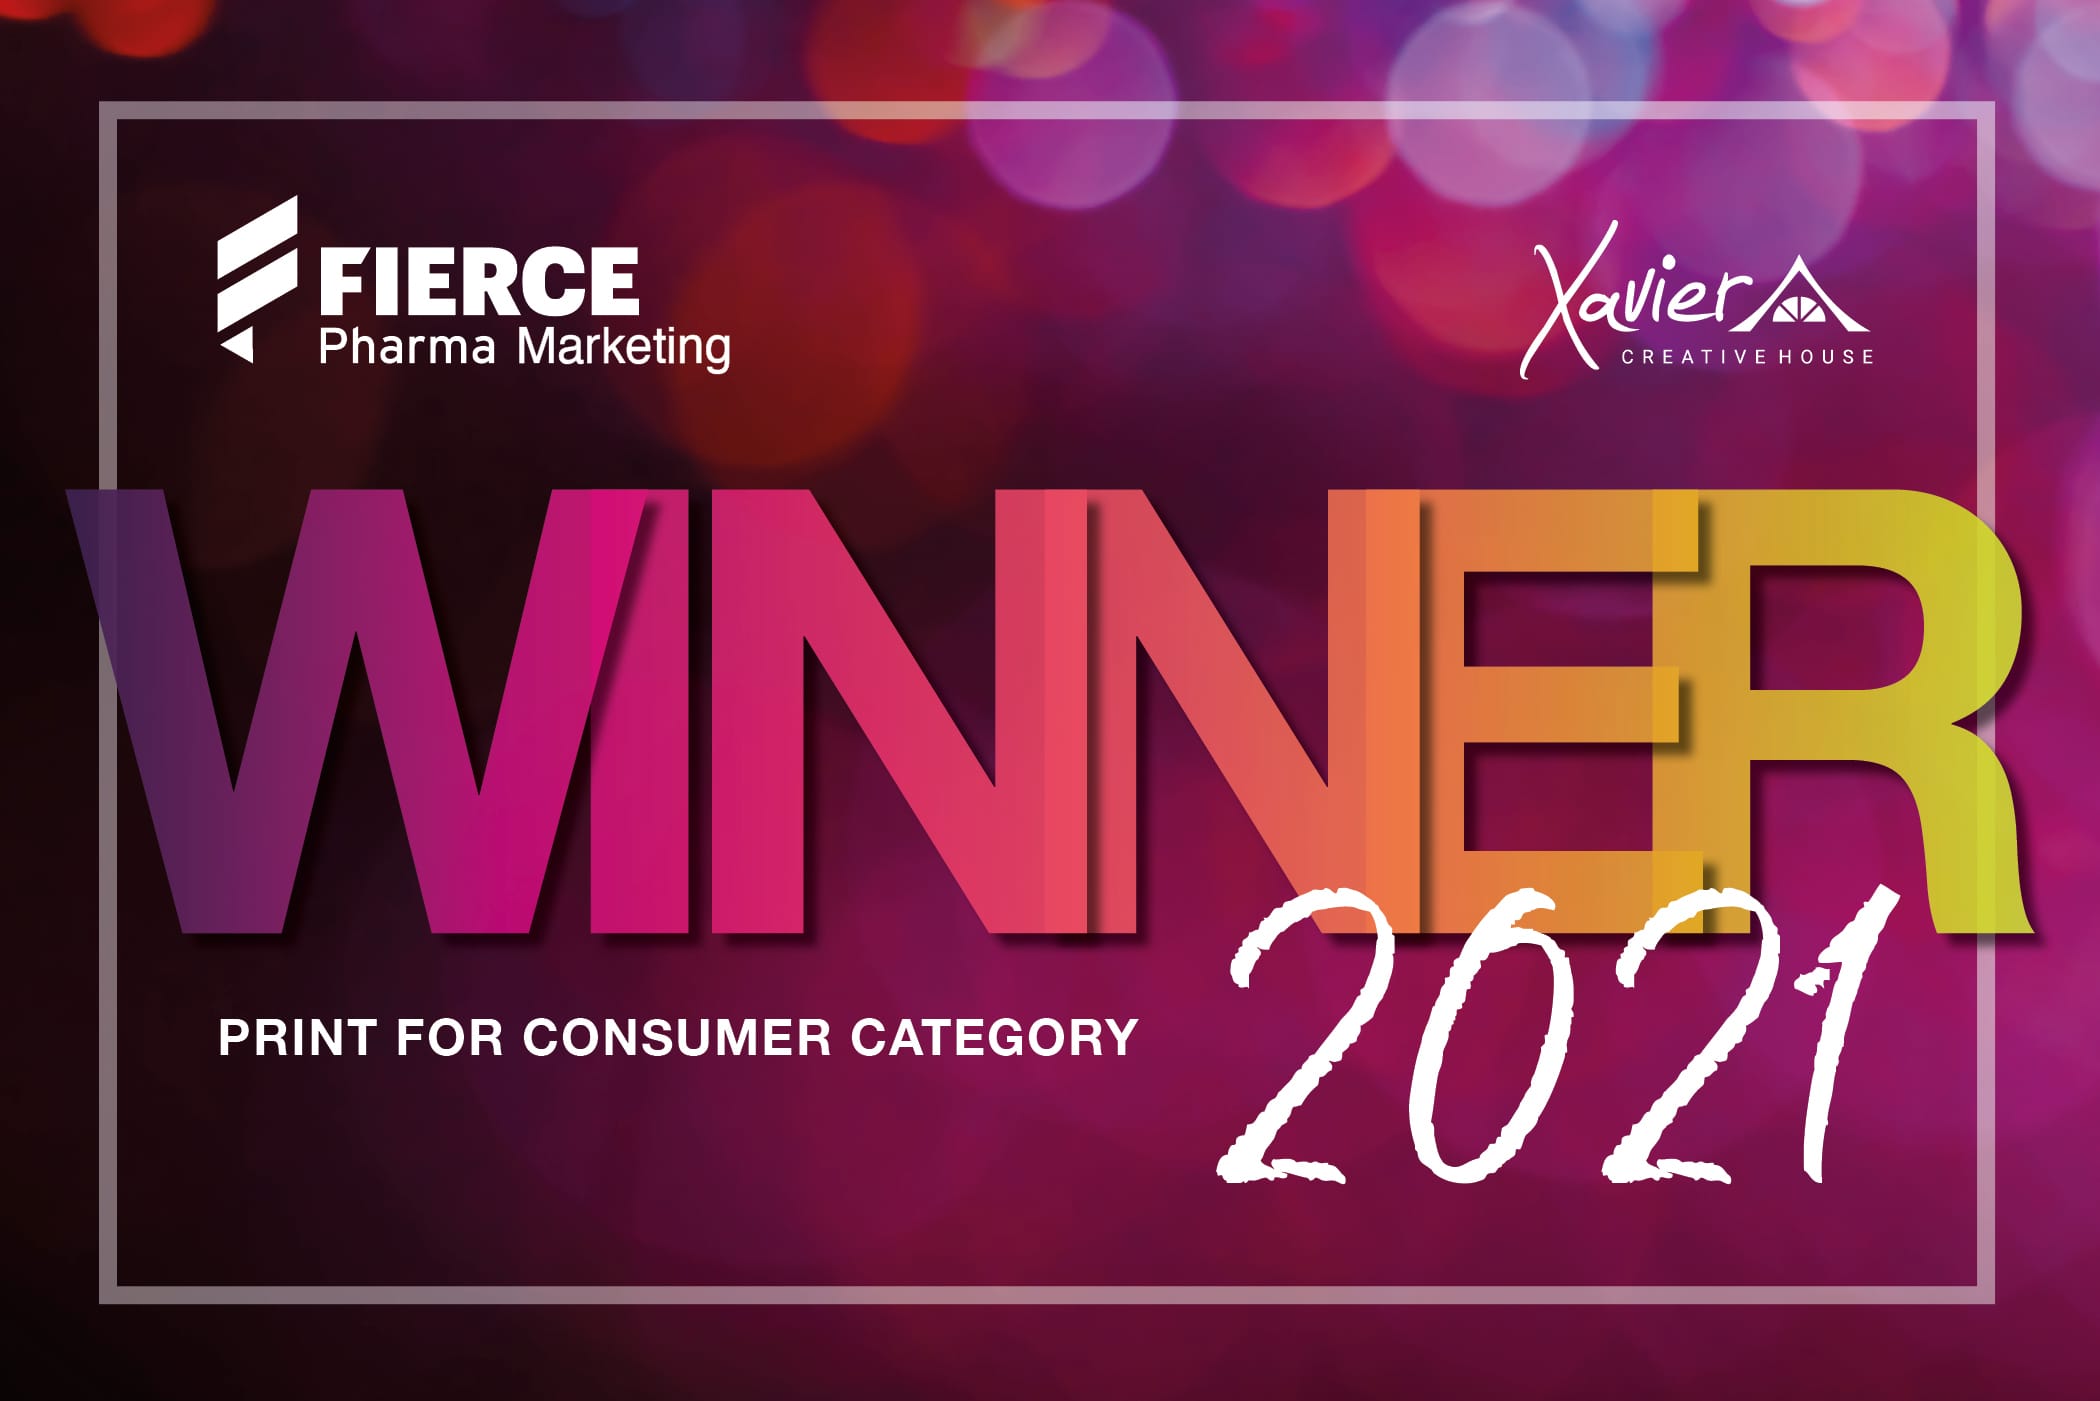 Fierce Pharma awards best-in-class marketing campaigns